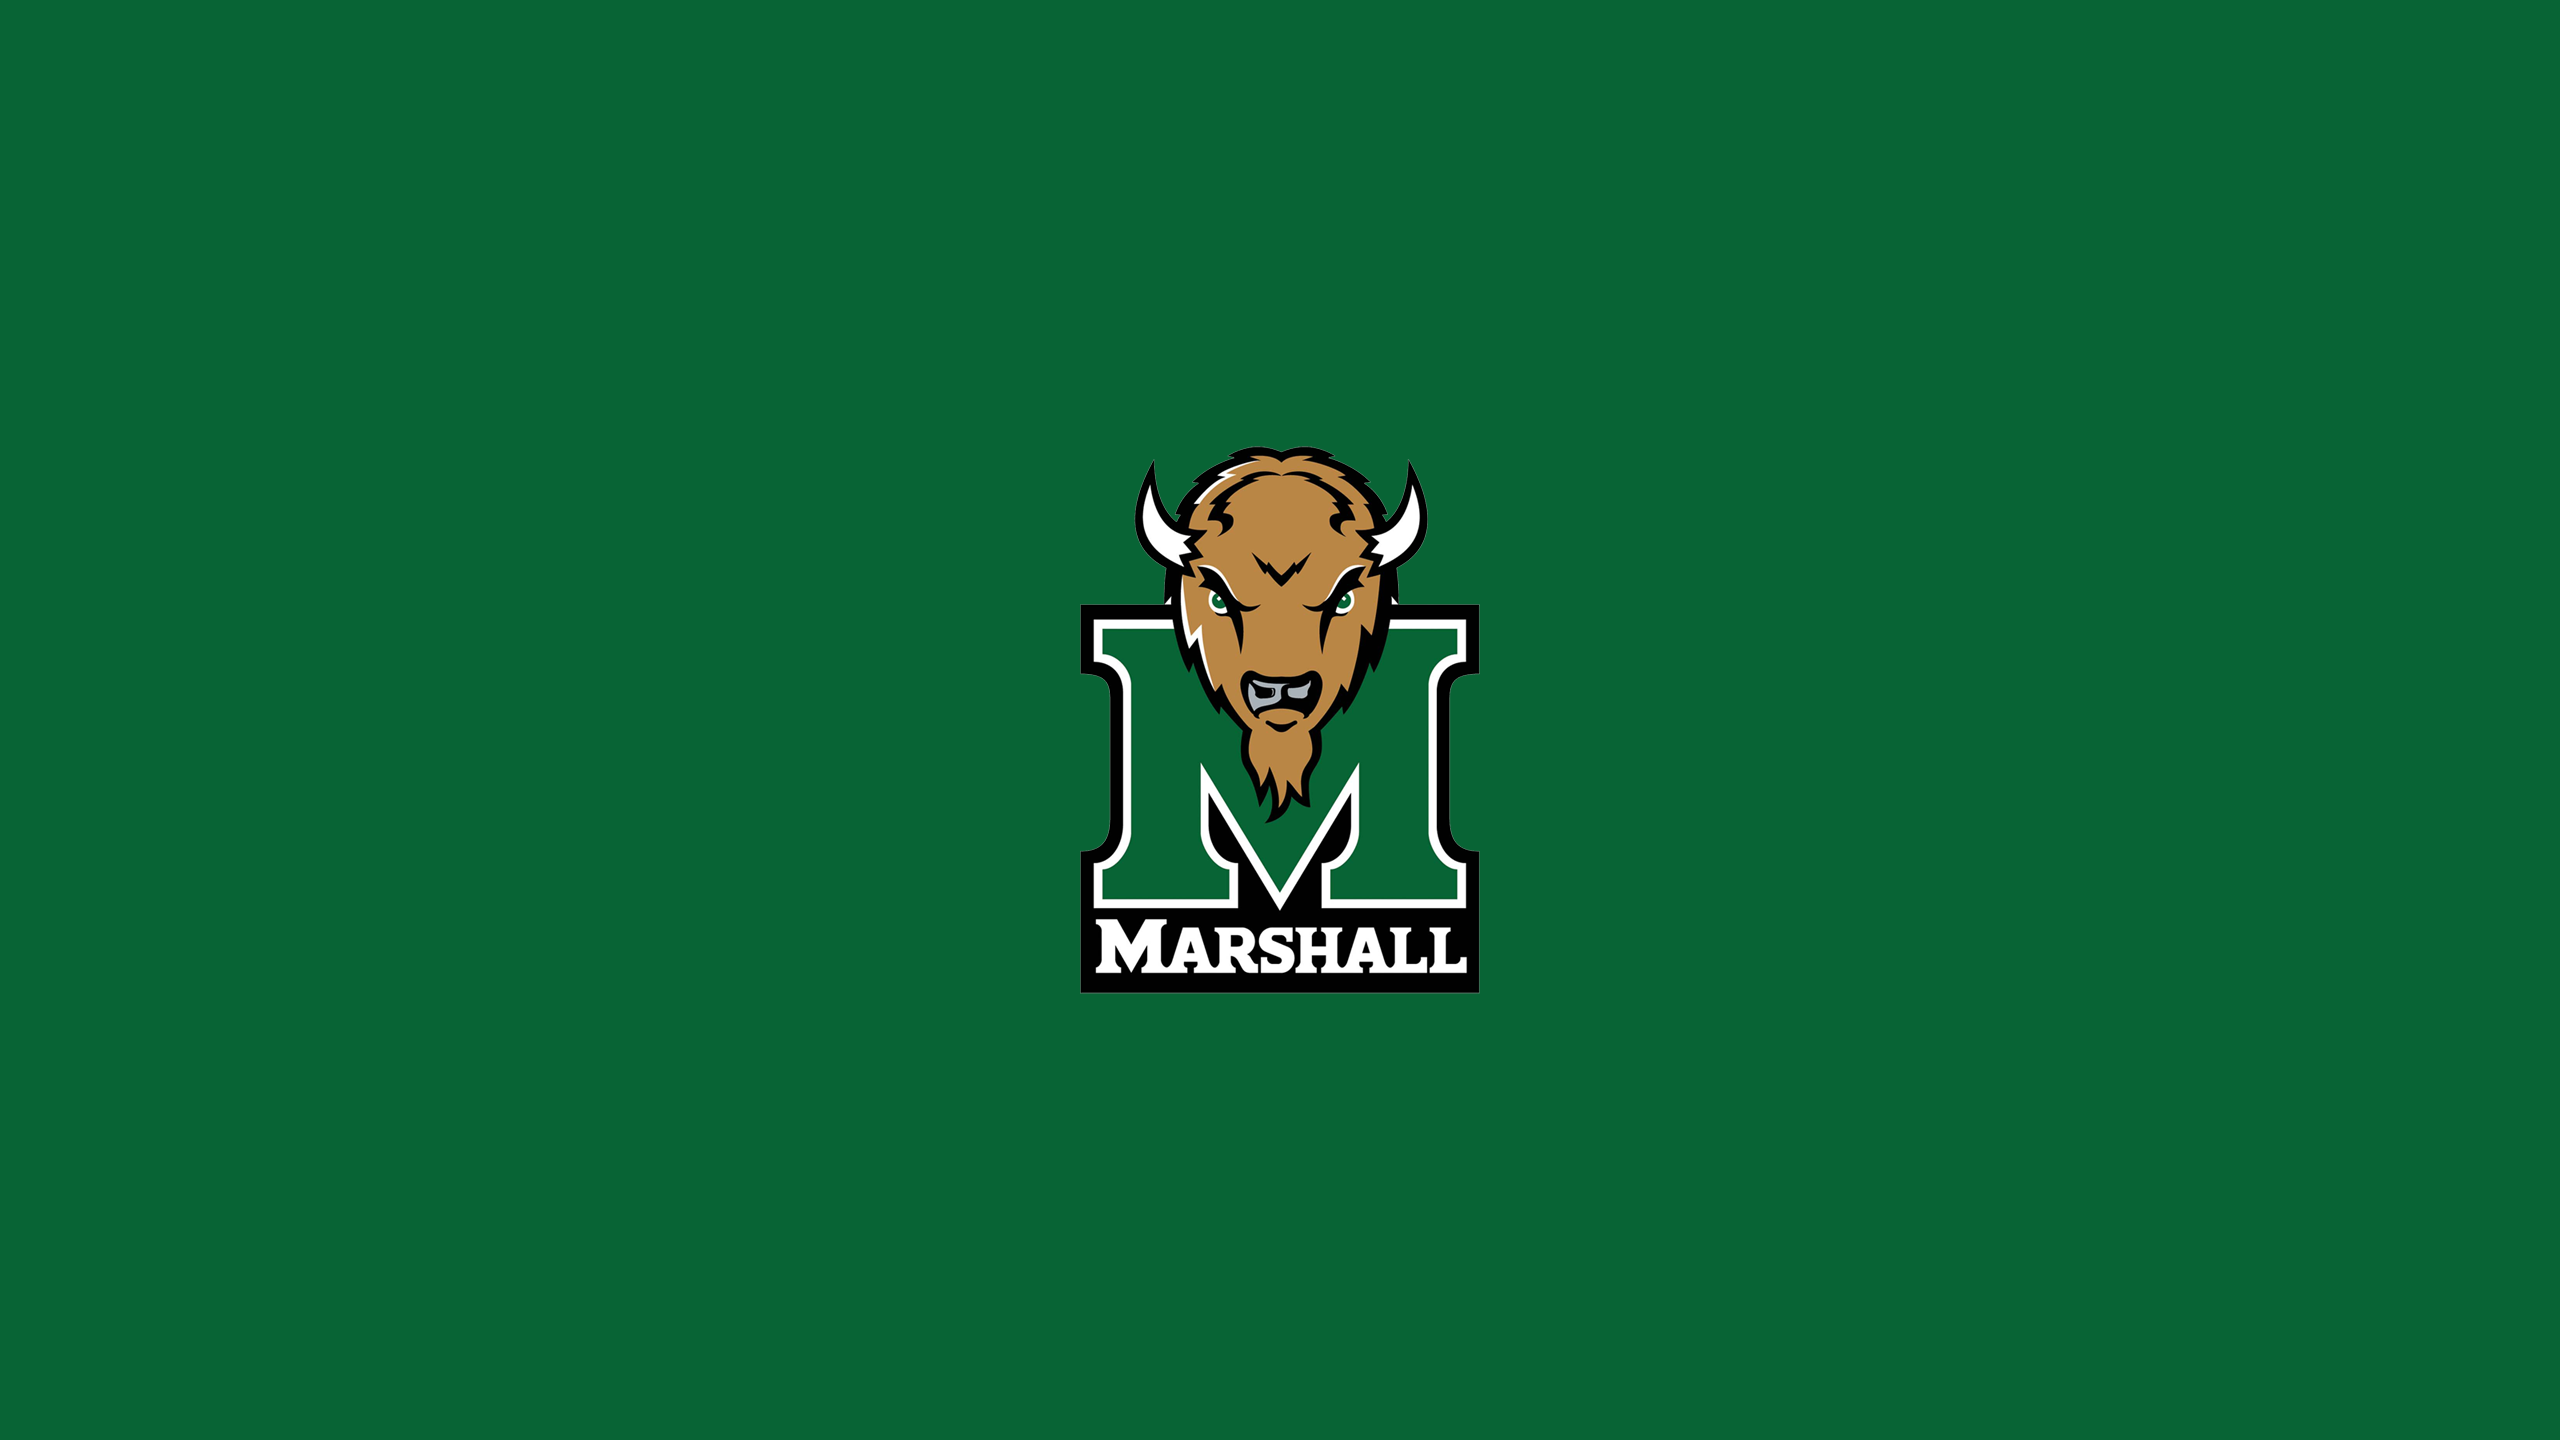 Marshall Thundering Herd Football - NCAAF - Square Bettor